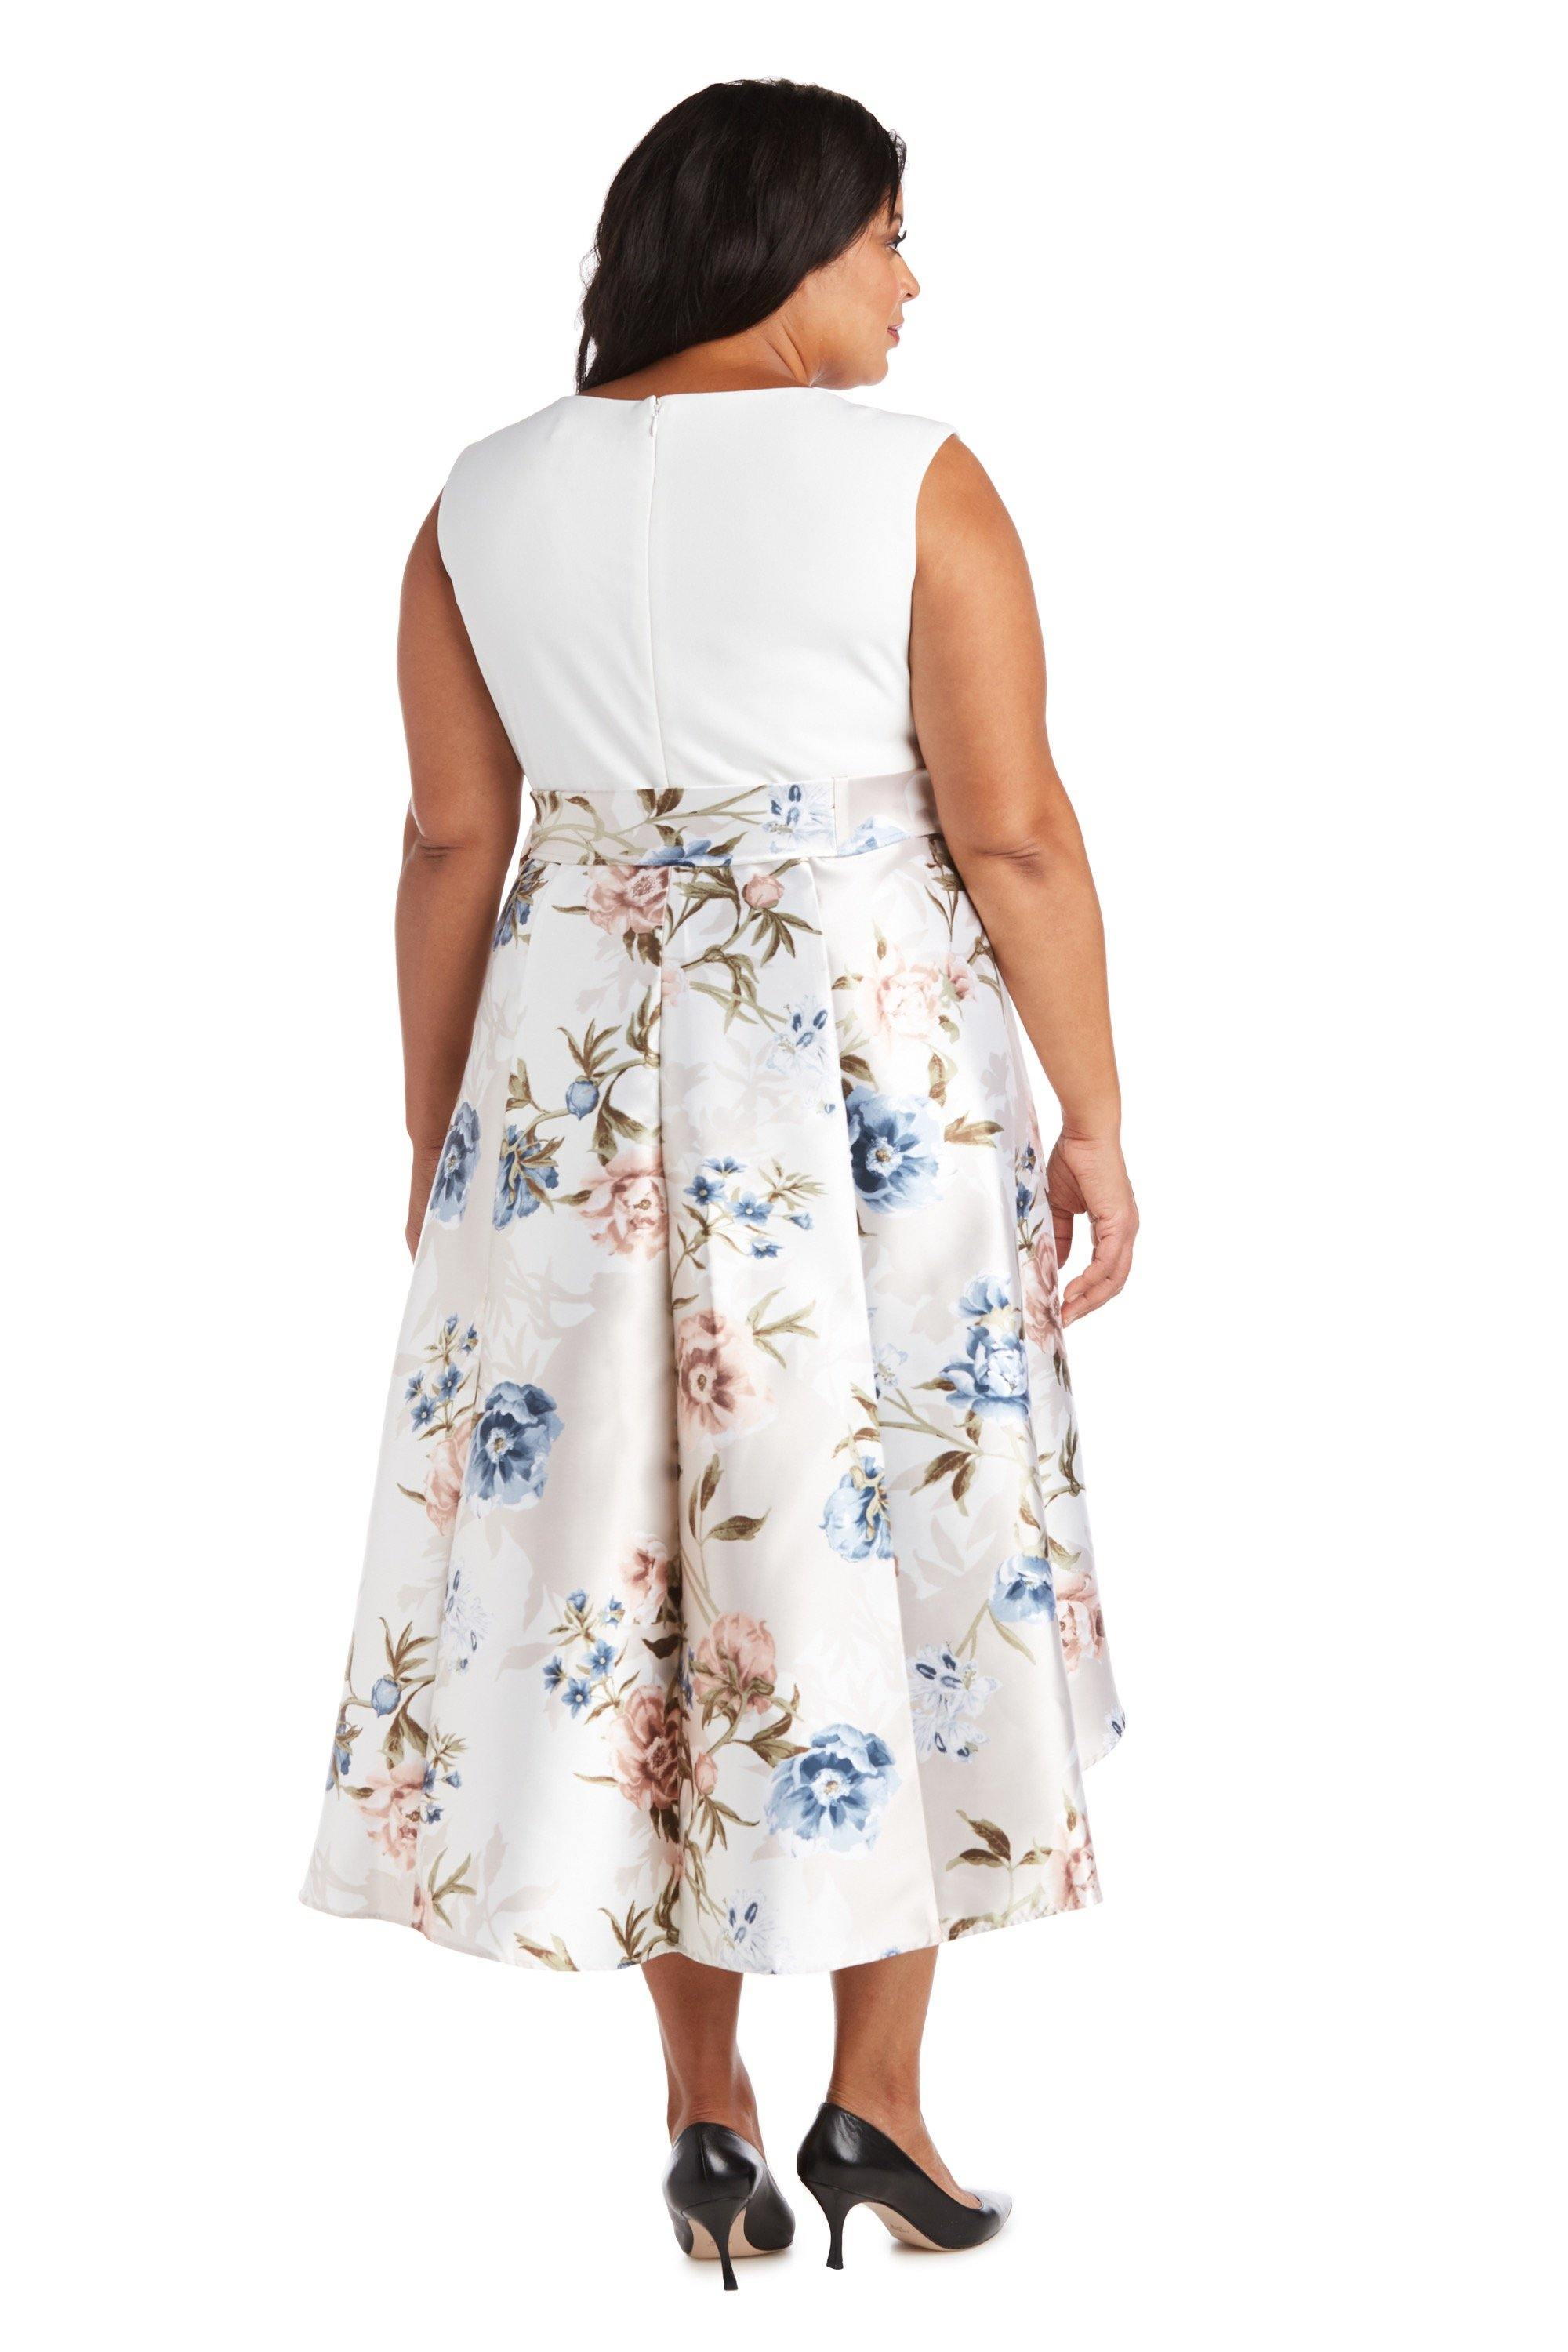 R&M Richards Plus Size High Low Floral Dress 7082W - The Dress Outlet